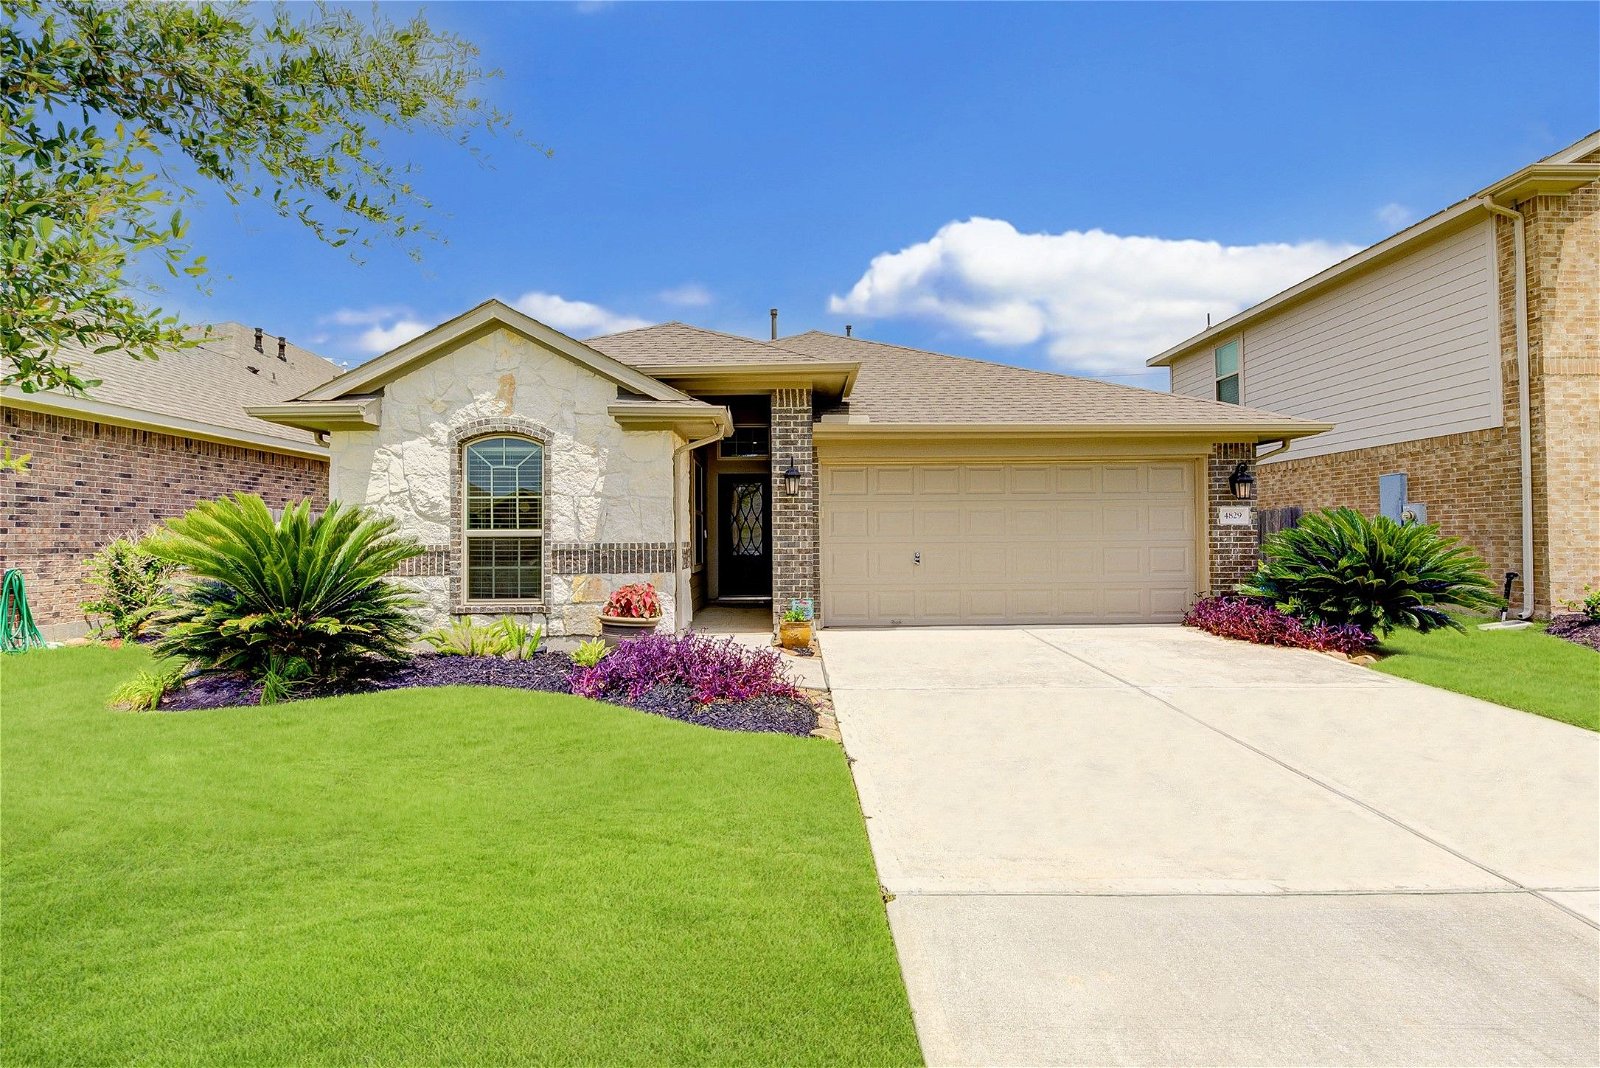 Real estate property located at 4829 La Piedra, Galveston, League City, TX, US